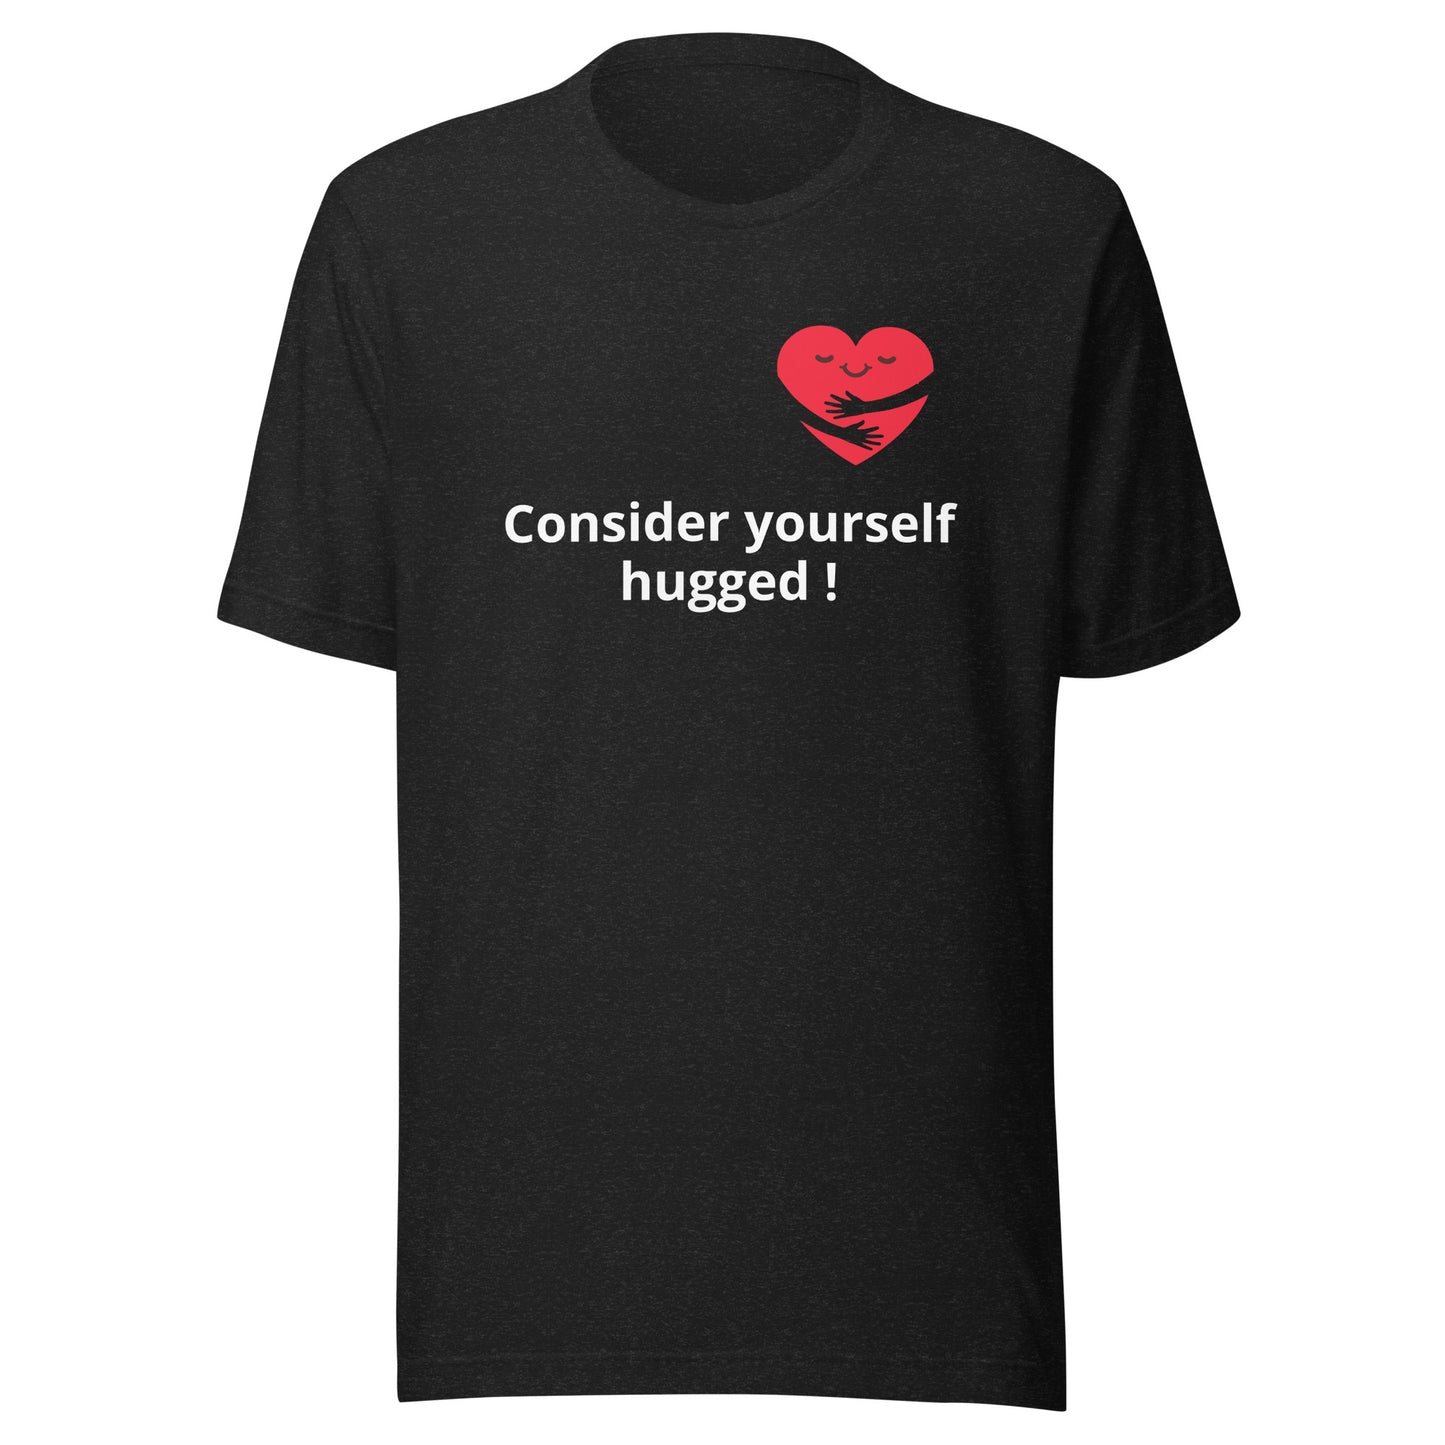 Consider yourself hugged - Unisex t-shirt